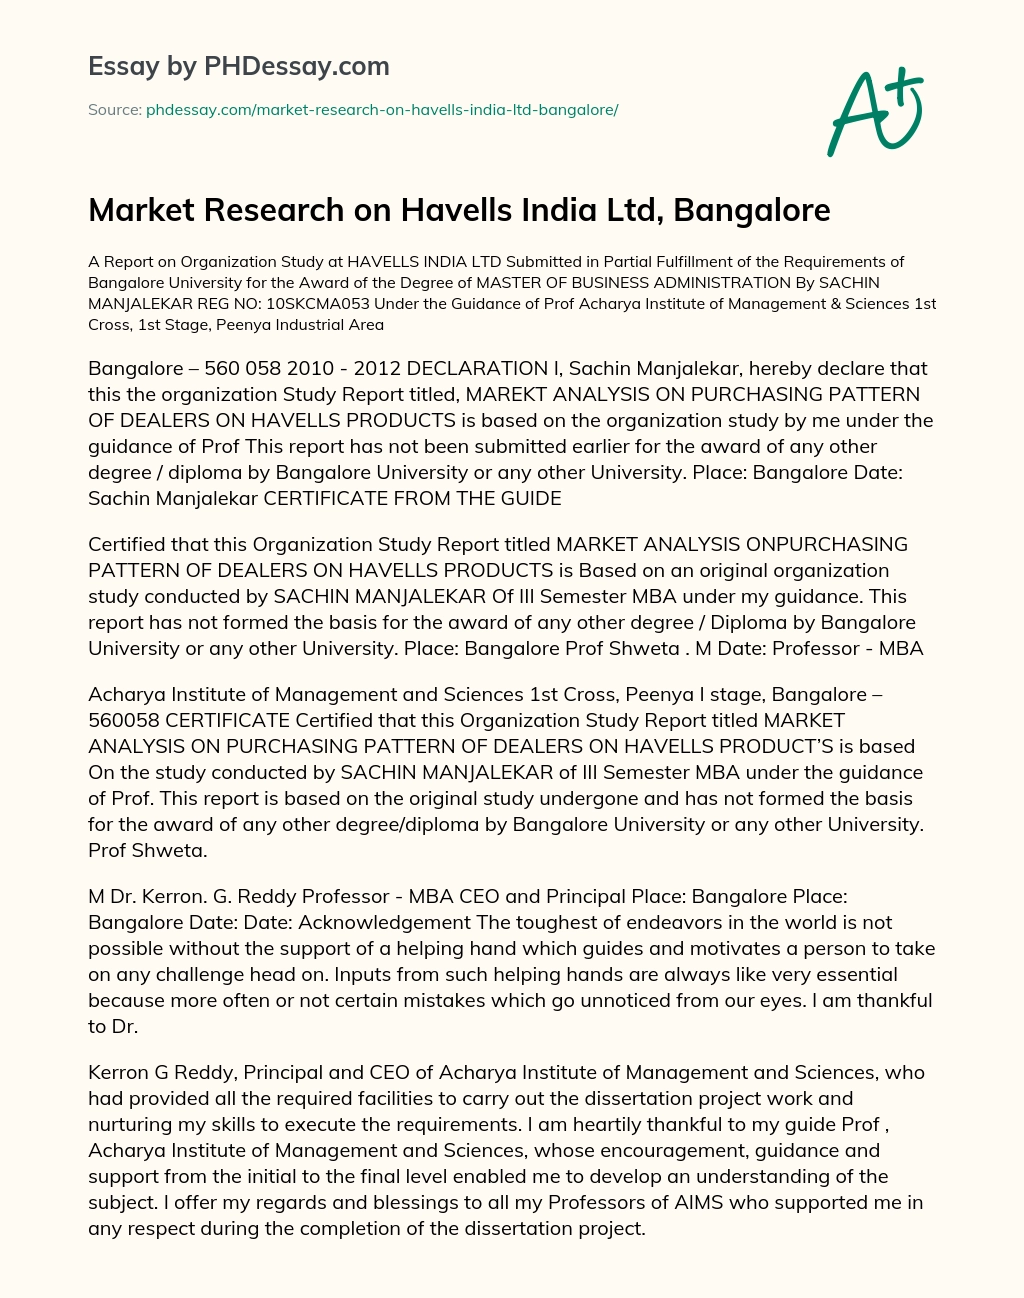 Market Research on Havells India Ltd, Bangalore essay